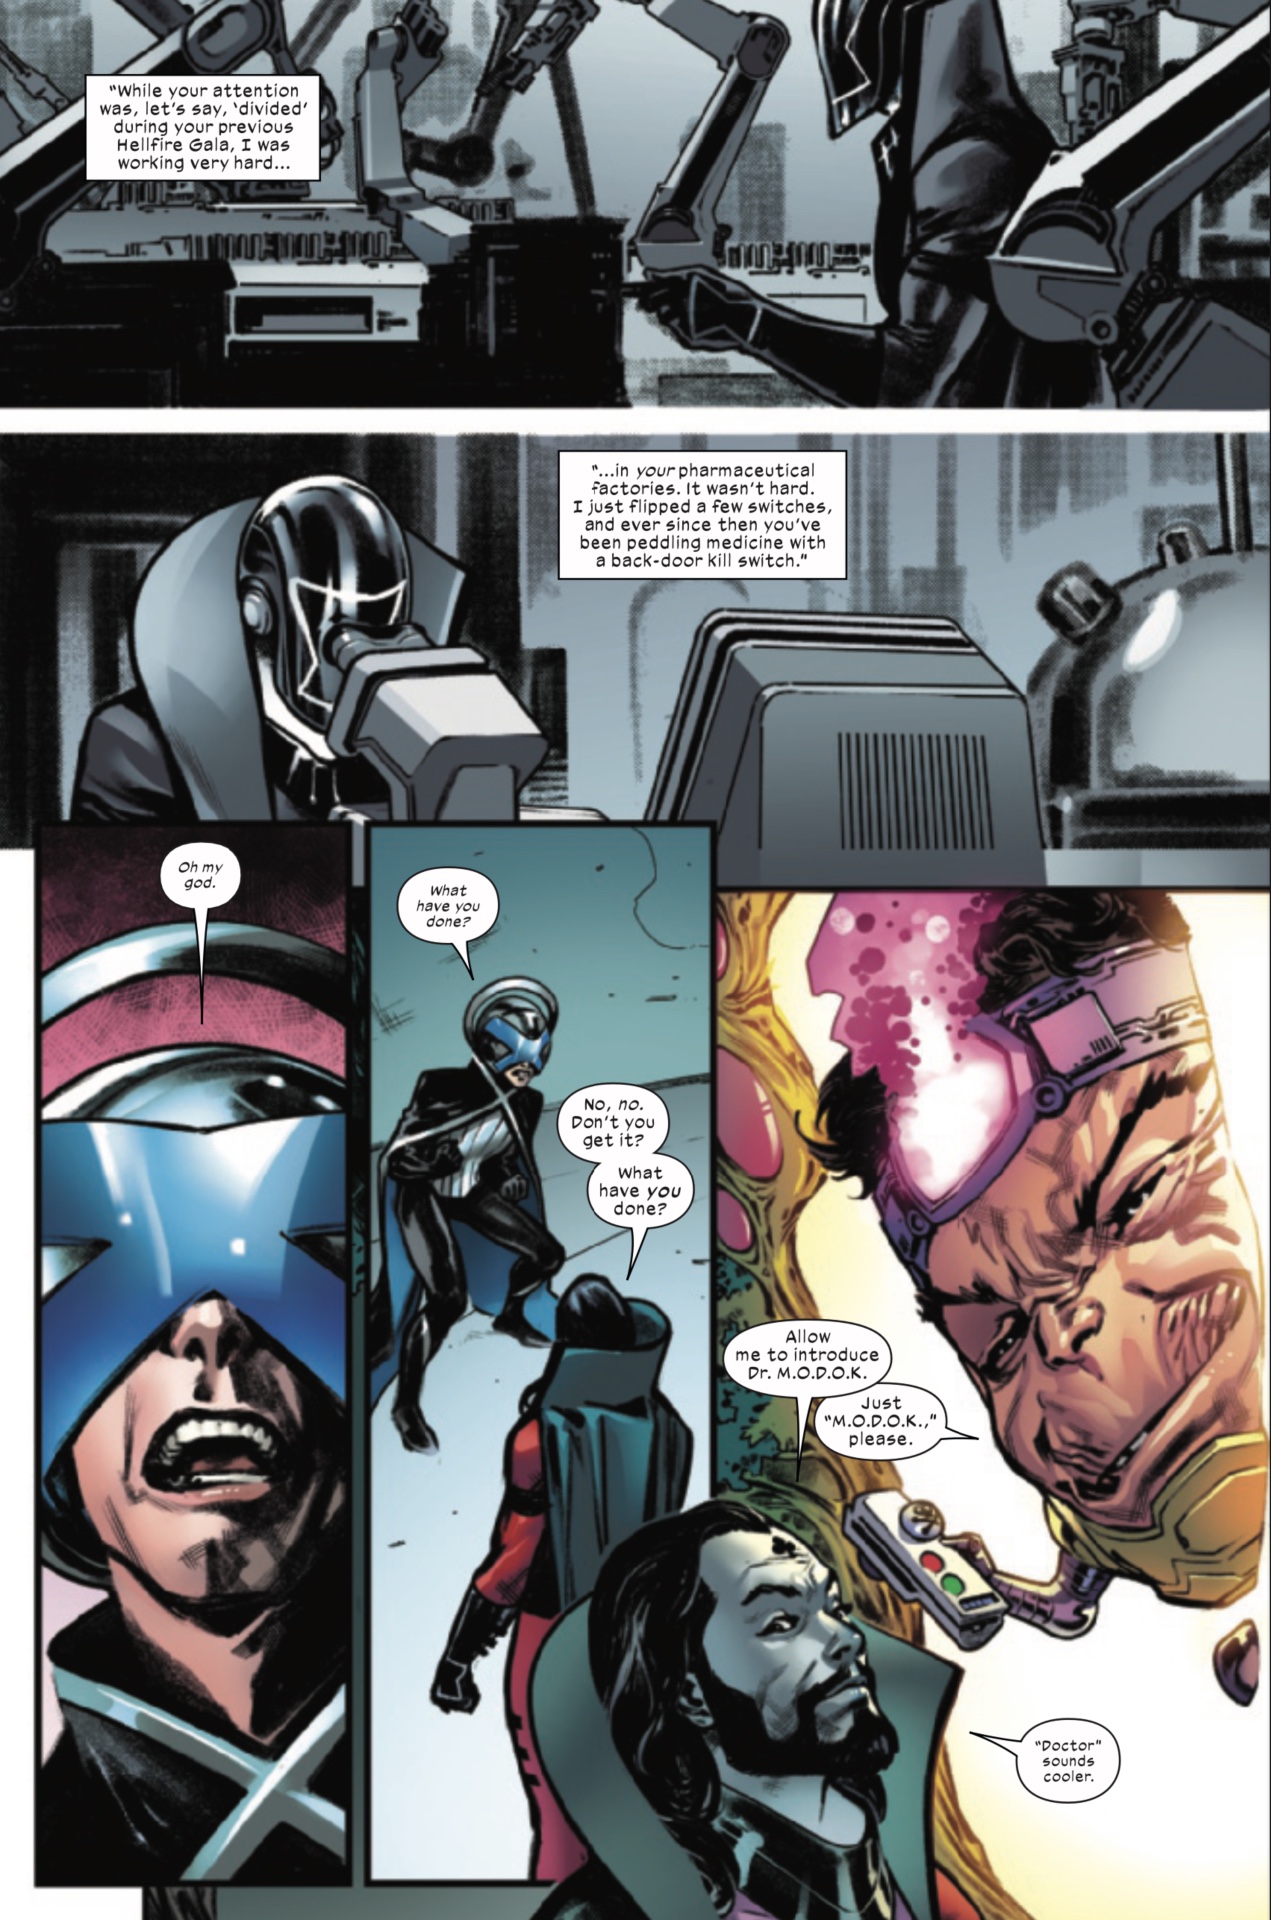 X-Men: Helvetesildgallaen 2023 - interiørbilder